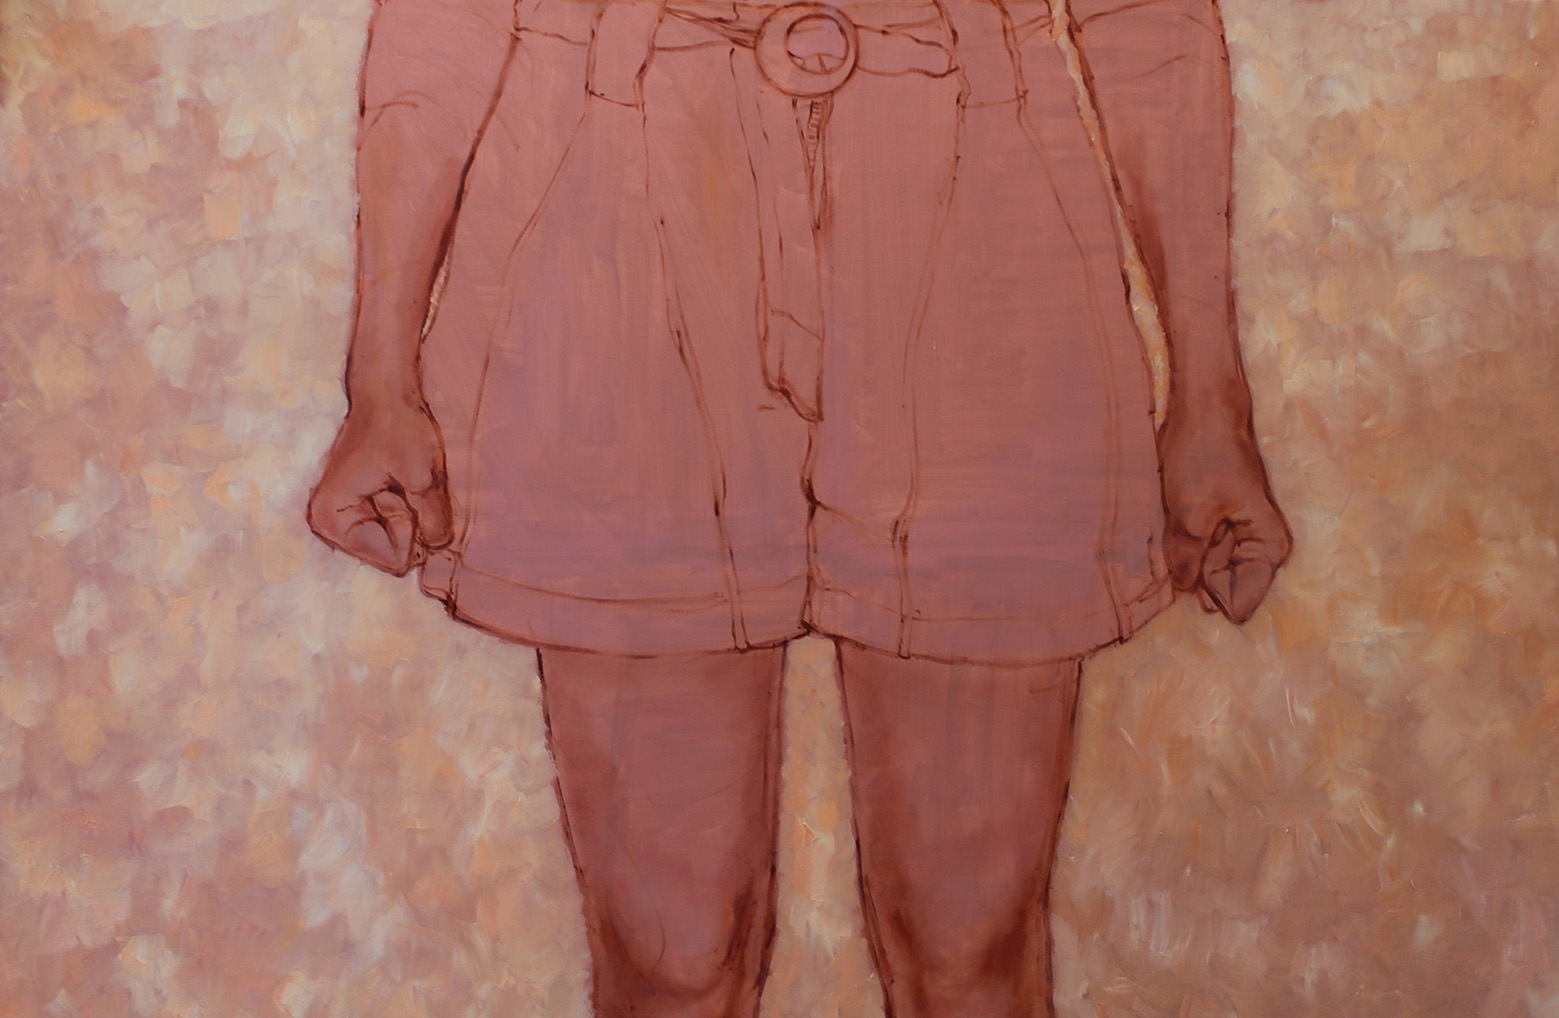 Arrabiata, oli on canvas,70x100cm, 2012. Sold|